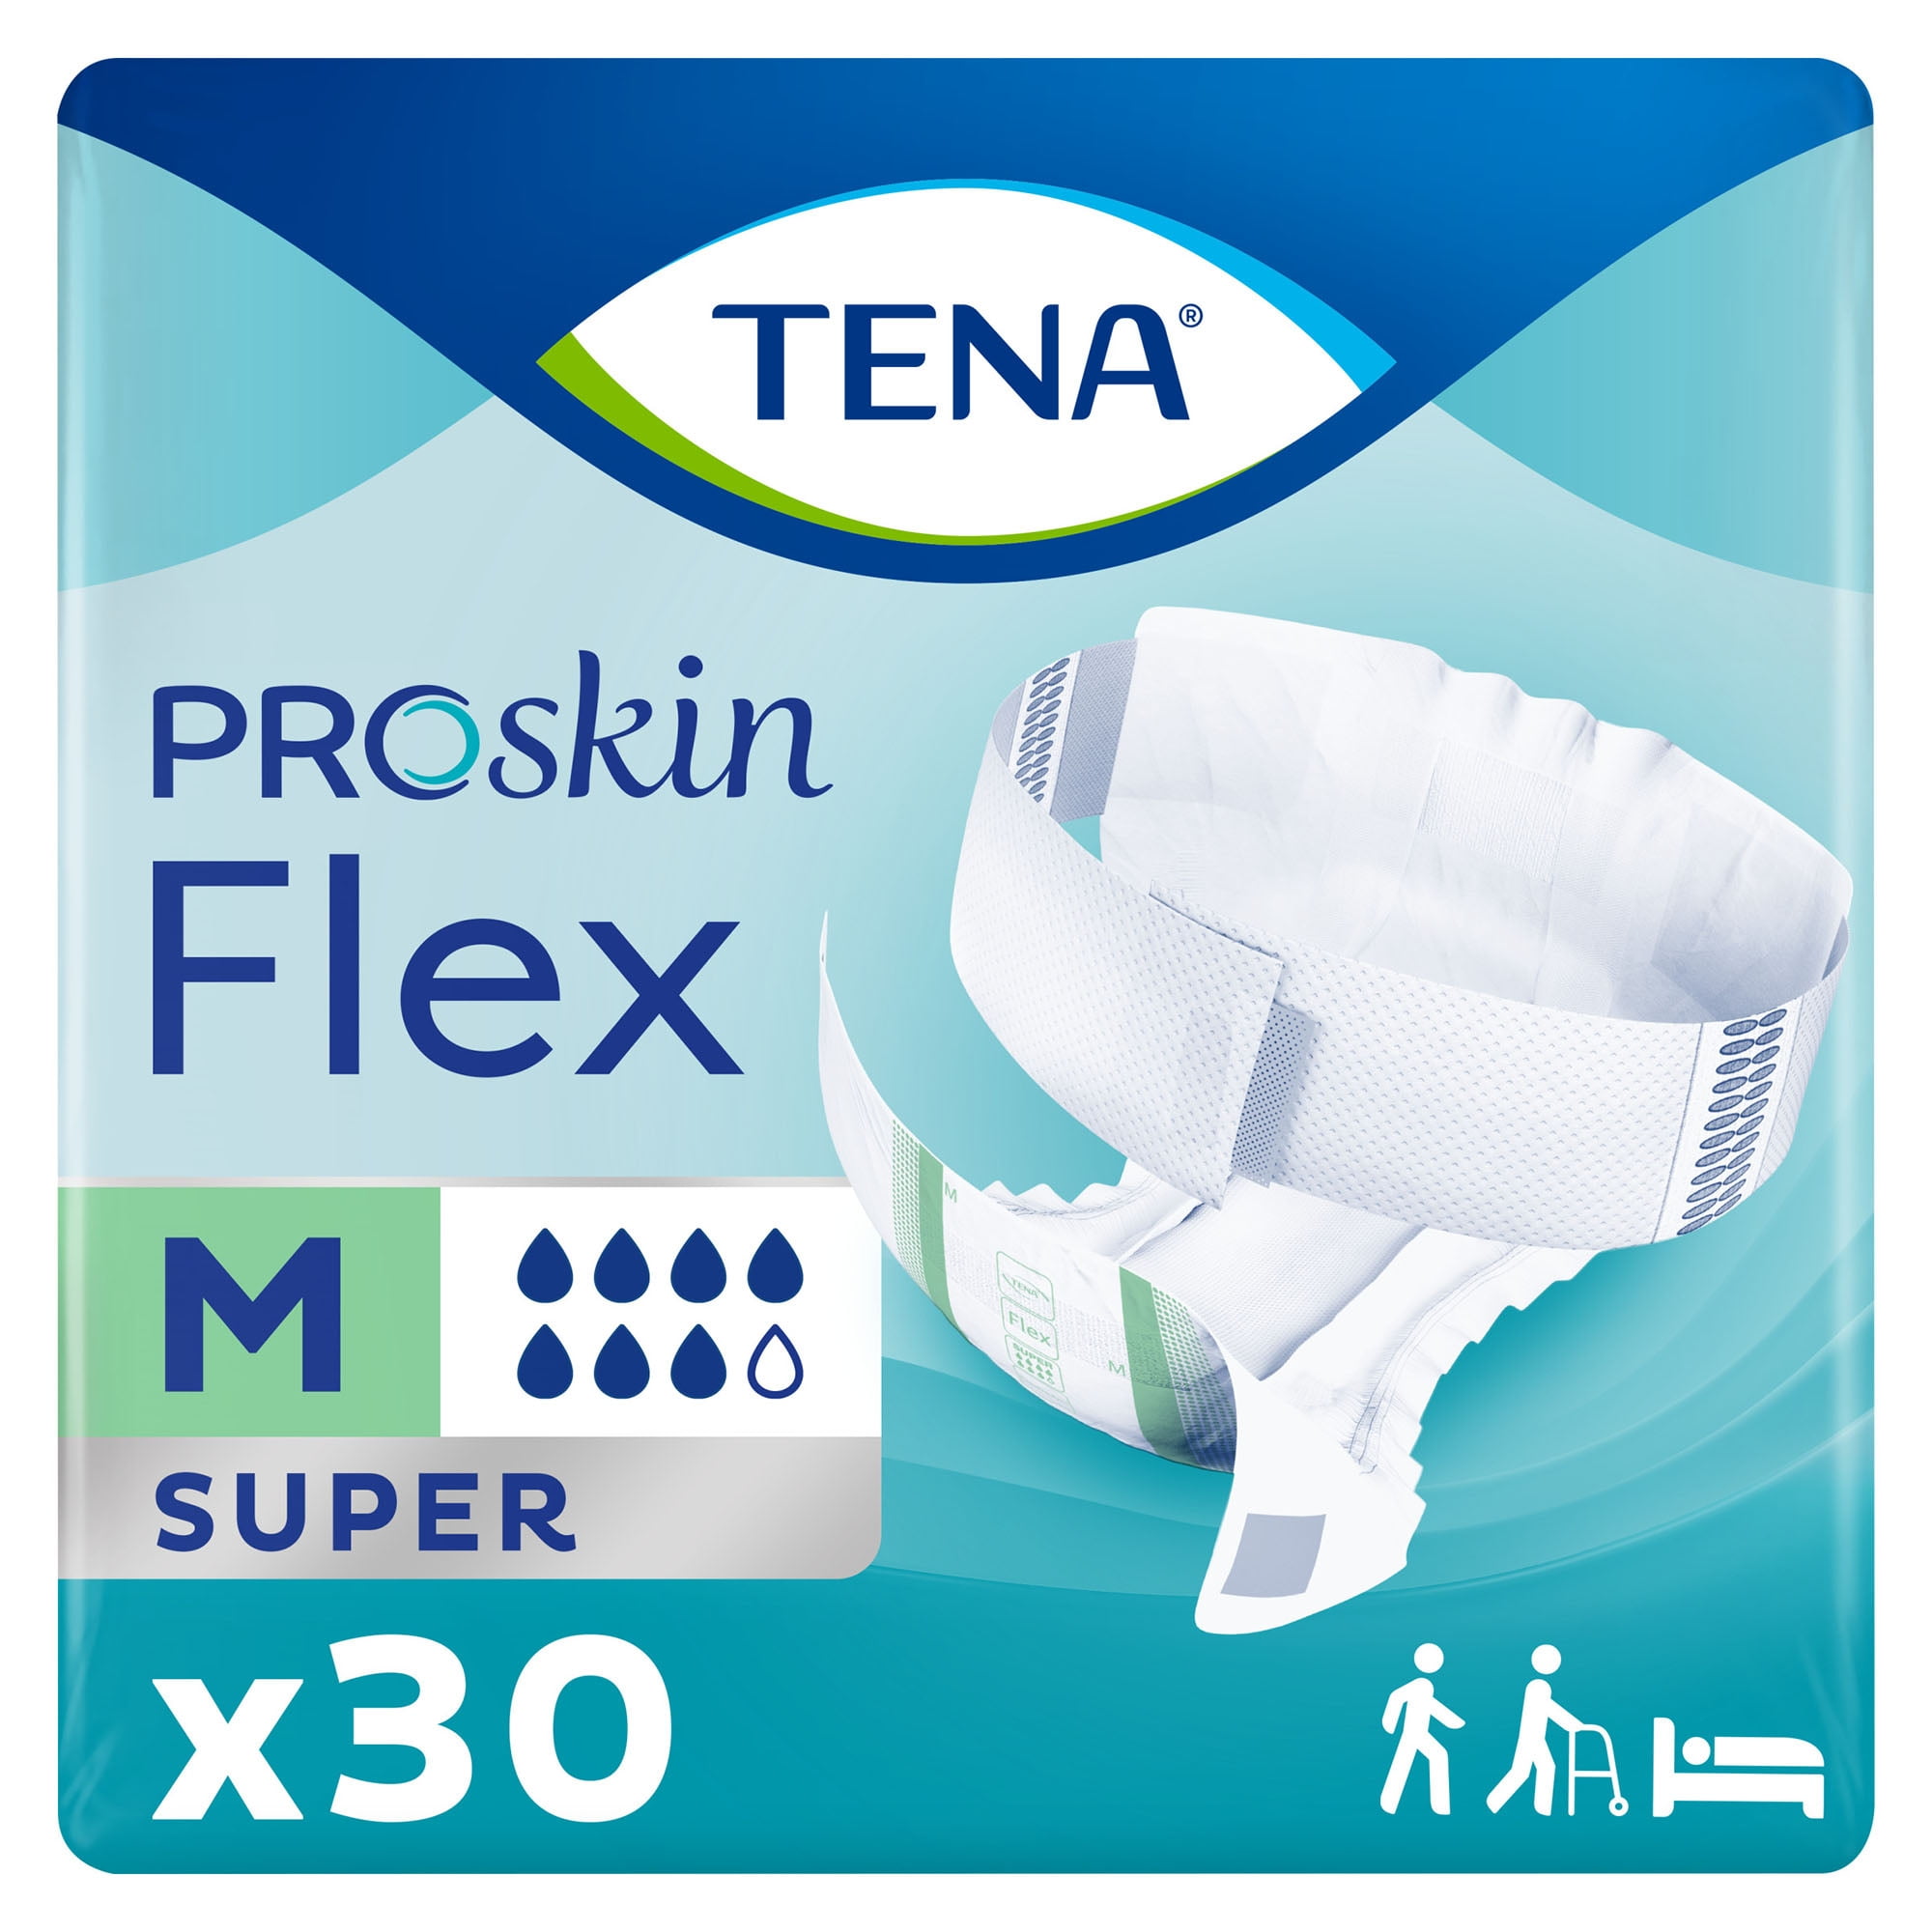 TENA ProSkin Flex Super Belted Undergarment, Incontinence